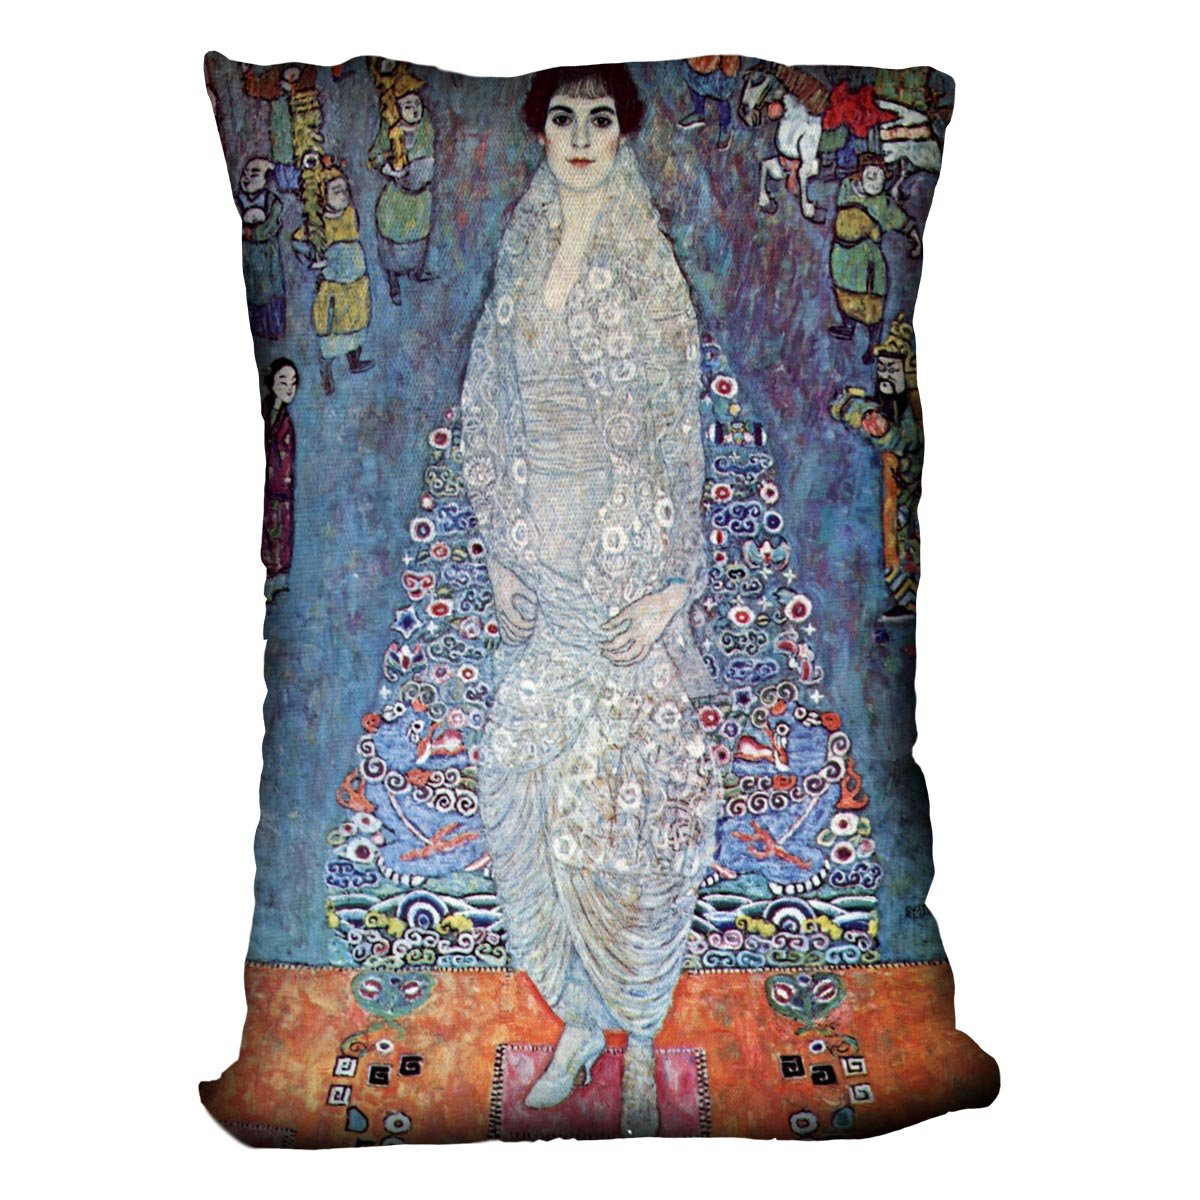 Baroness Elizabeth by Klimt Throw Pillow